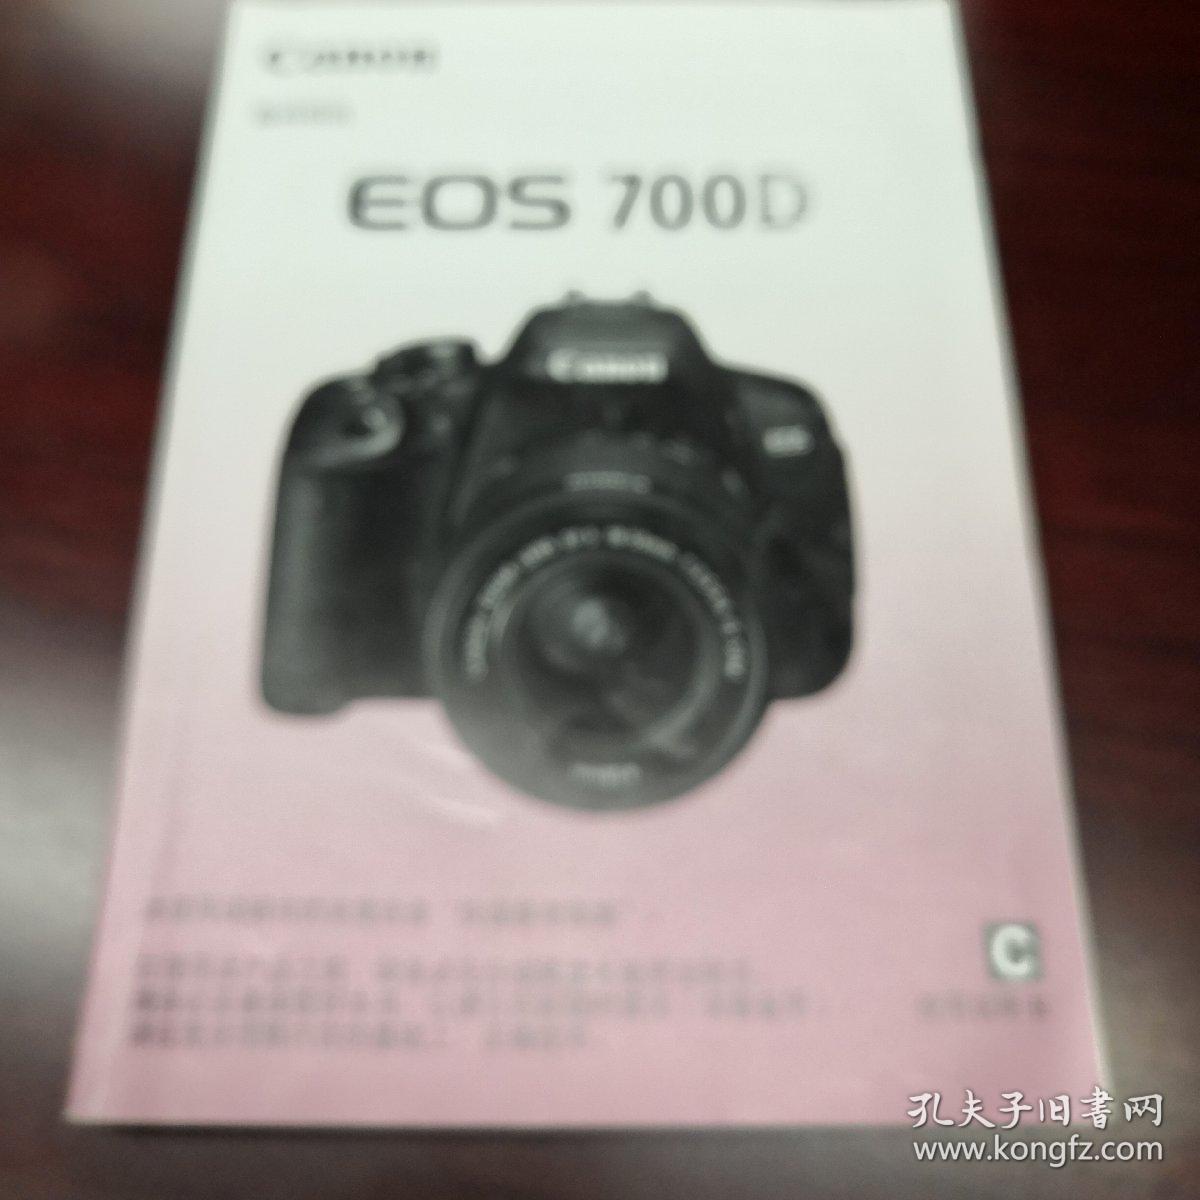 《Canon EOS700D 使用说明书C》Dnntg2